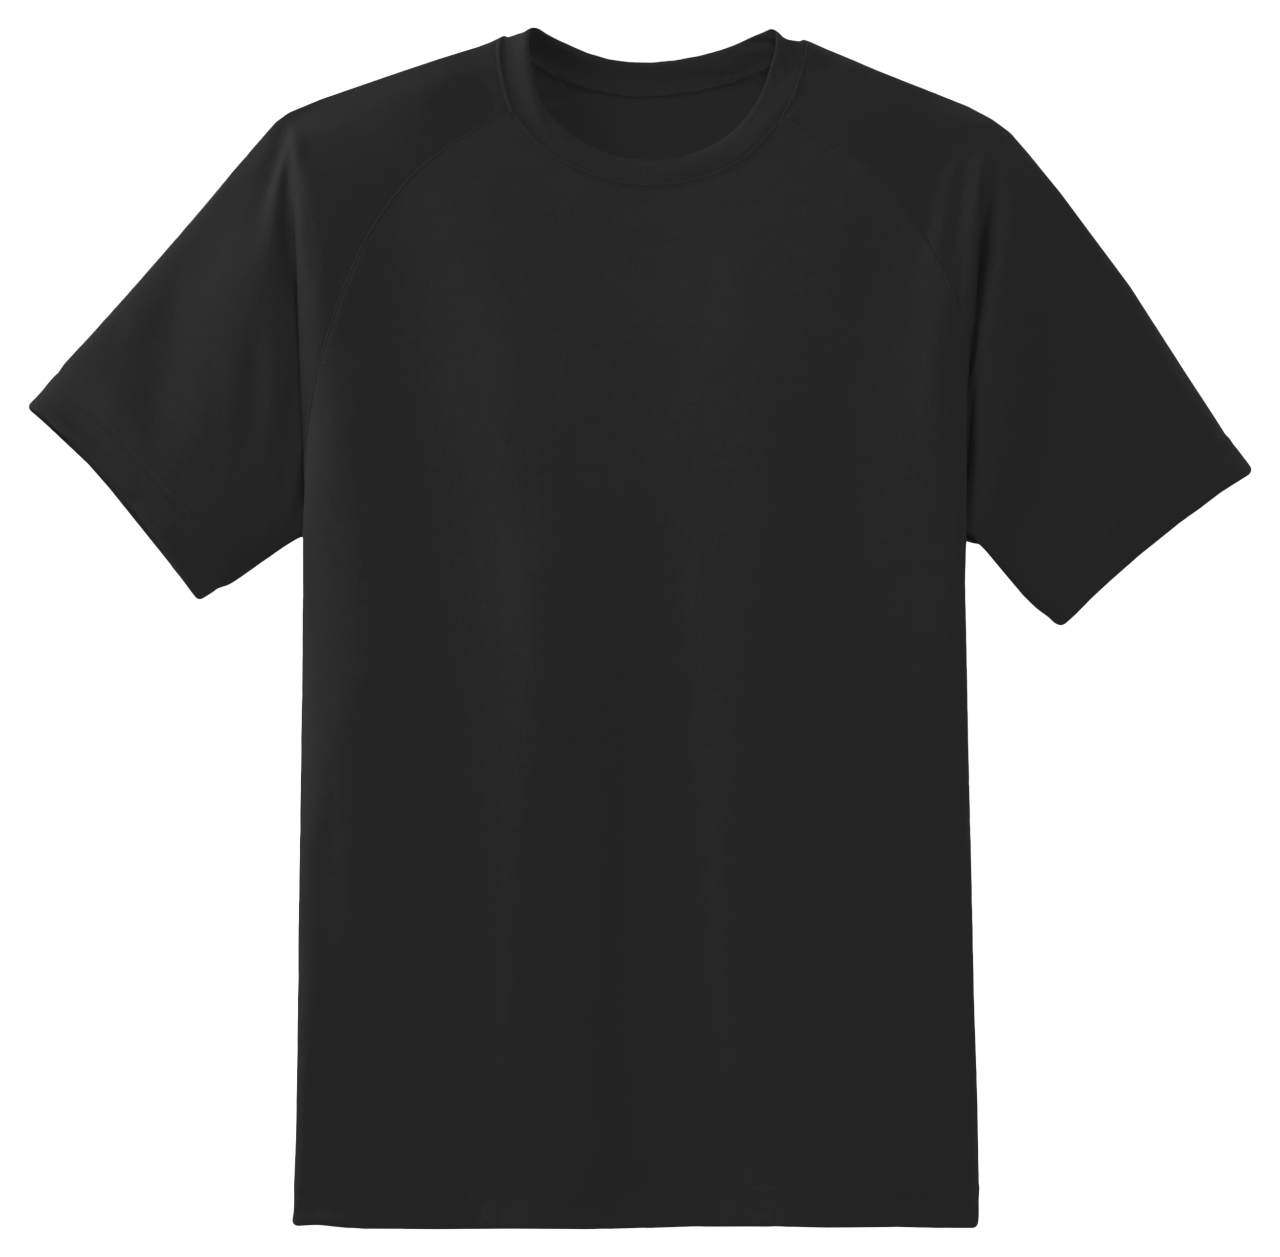 Download Black T Shirt PNG Image - PurePNG | Free transparent CC0 PNG Image Library